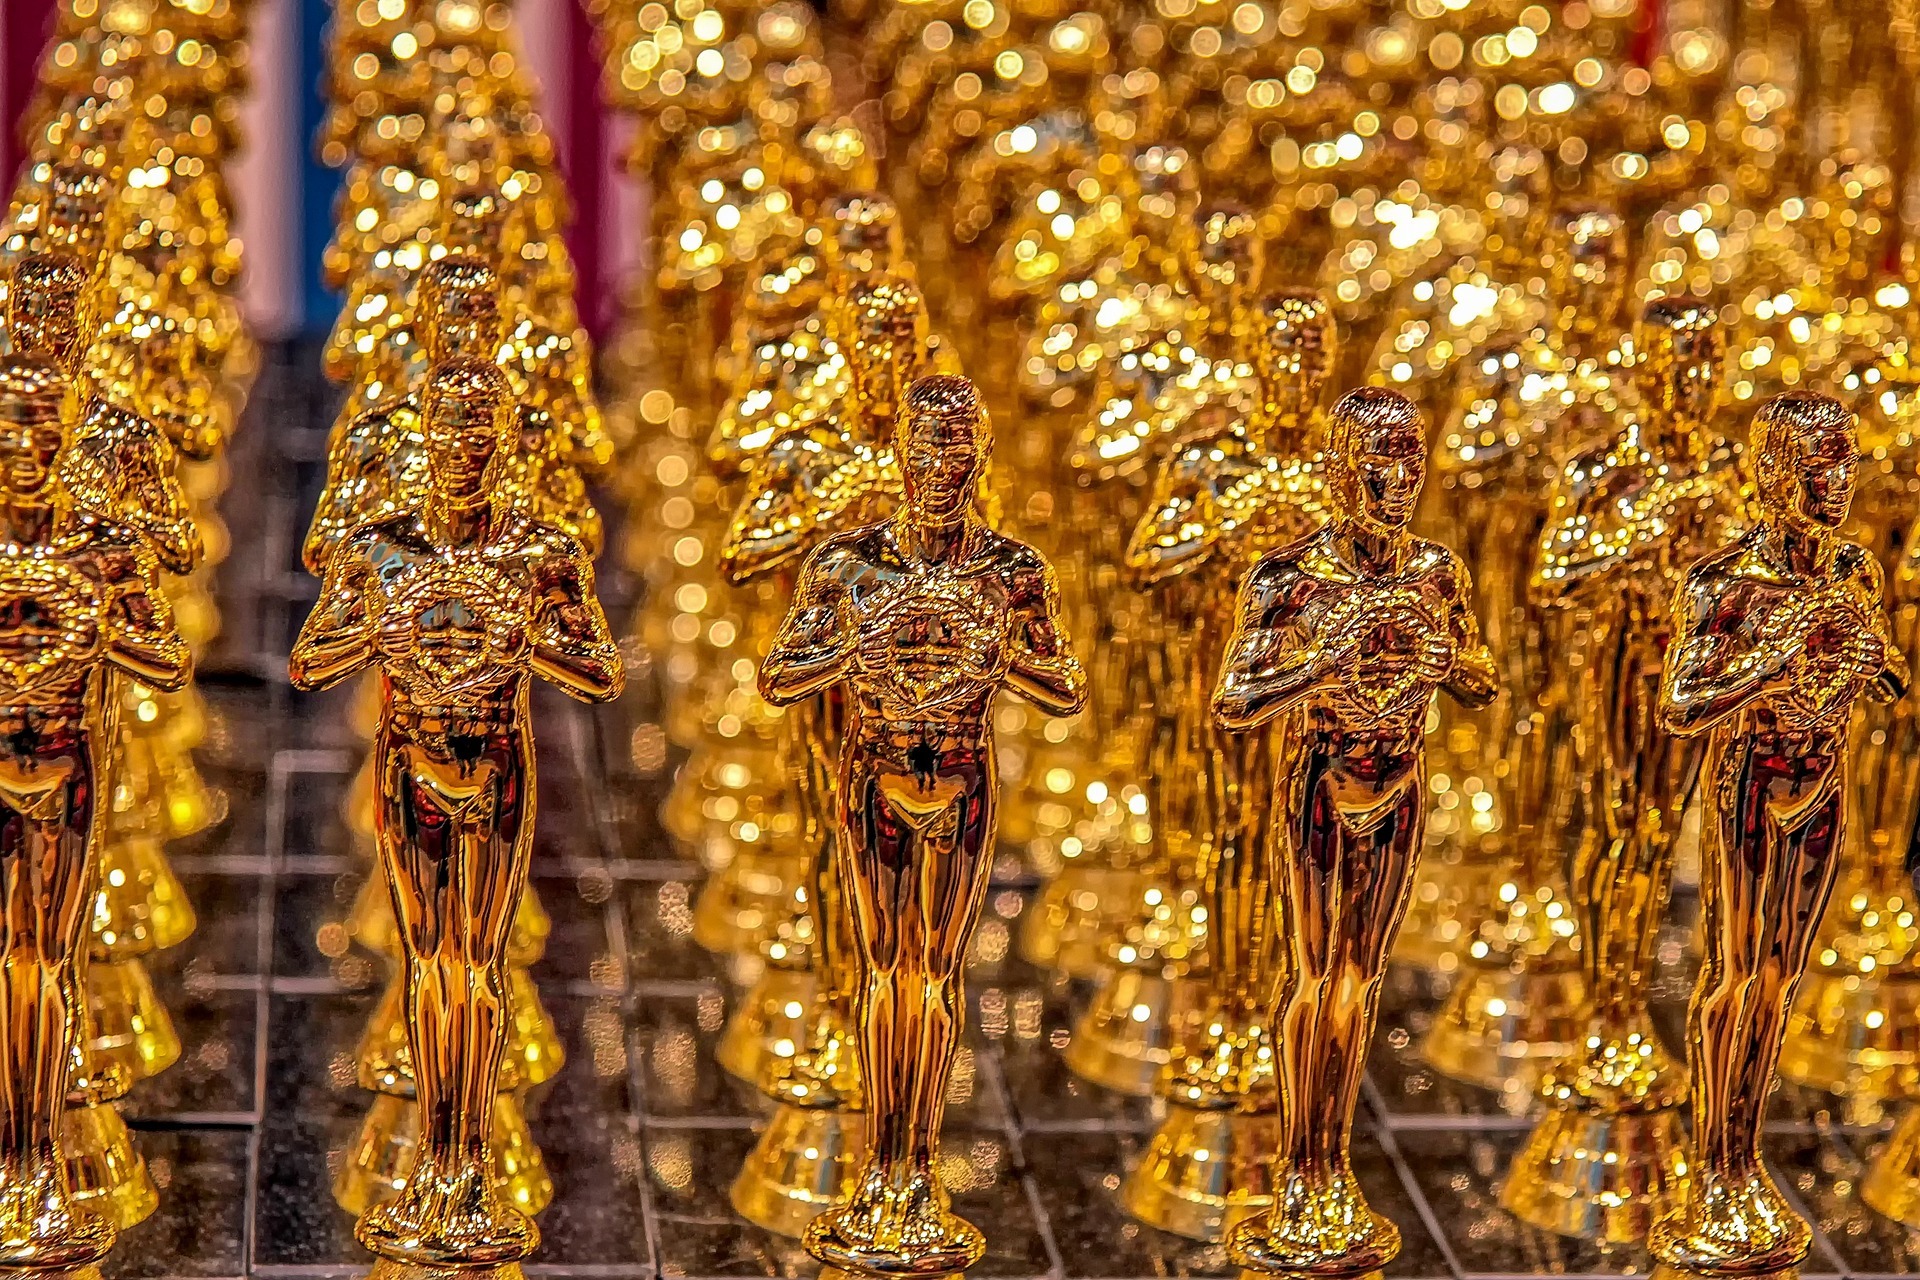 Oscar’s Trophy replicas